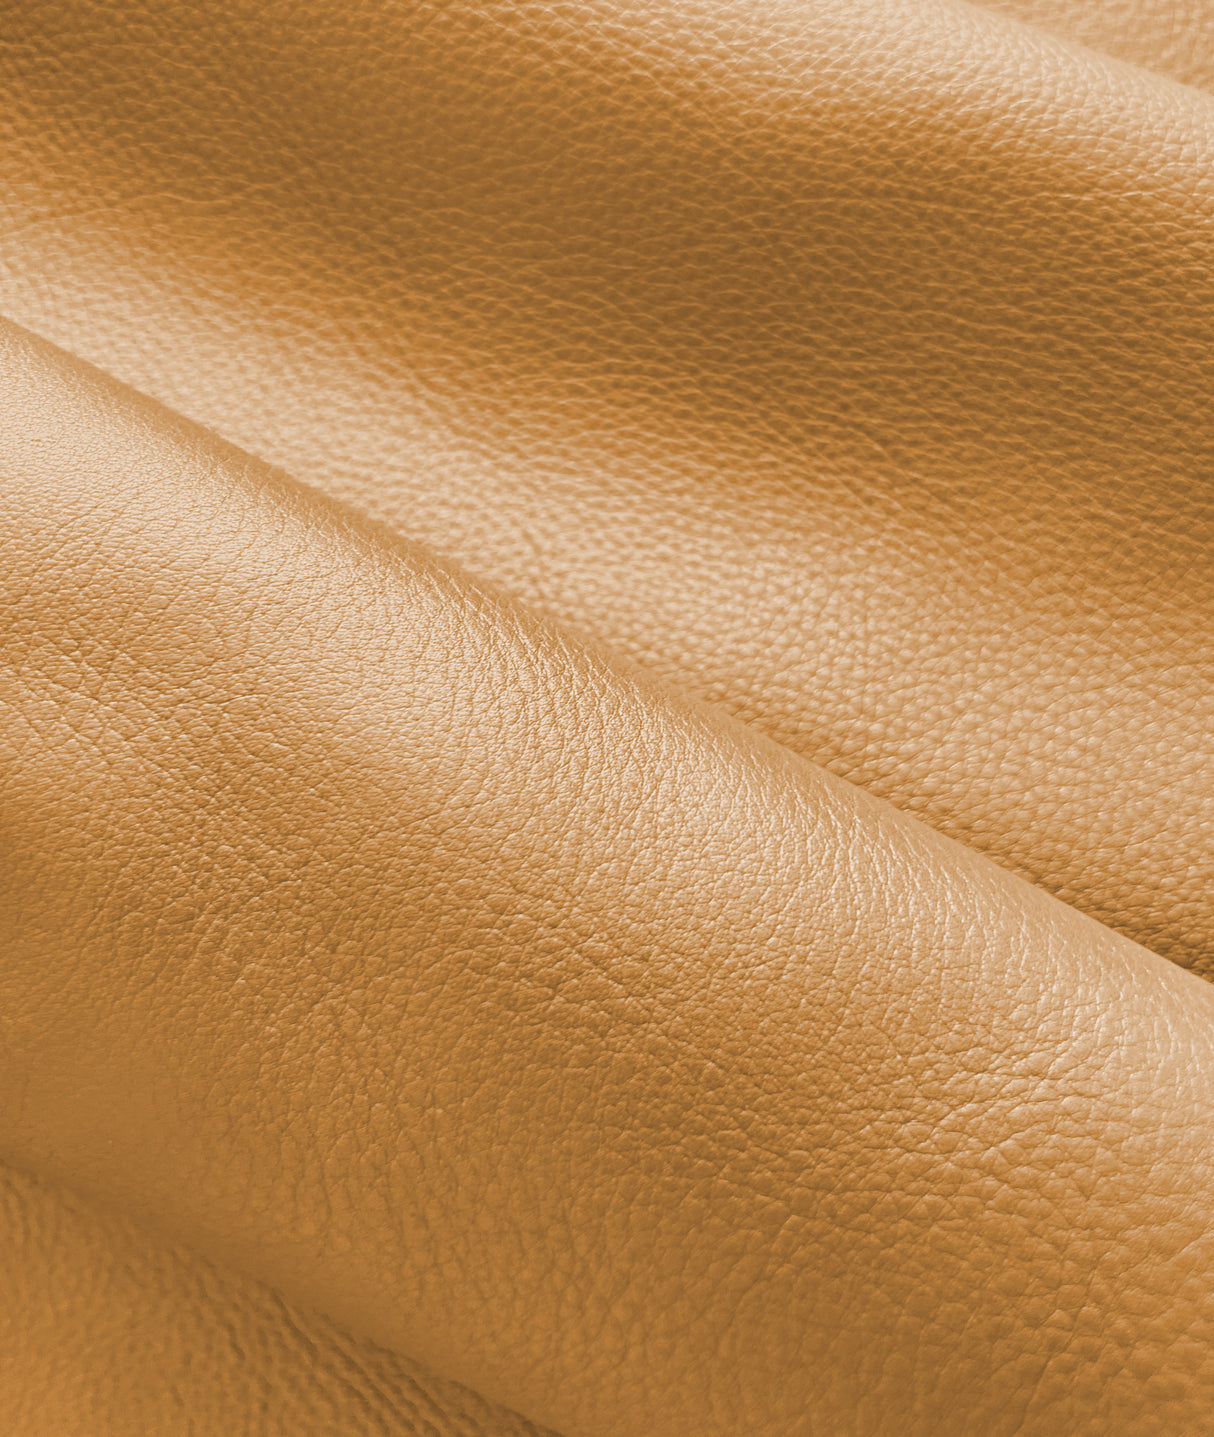 Vachetta Natural Pebble – American Breed Skin Leather